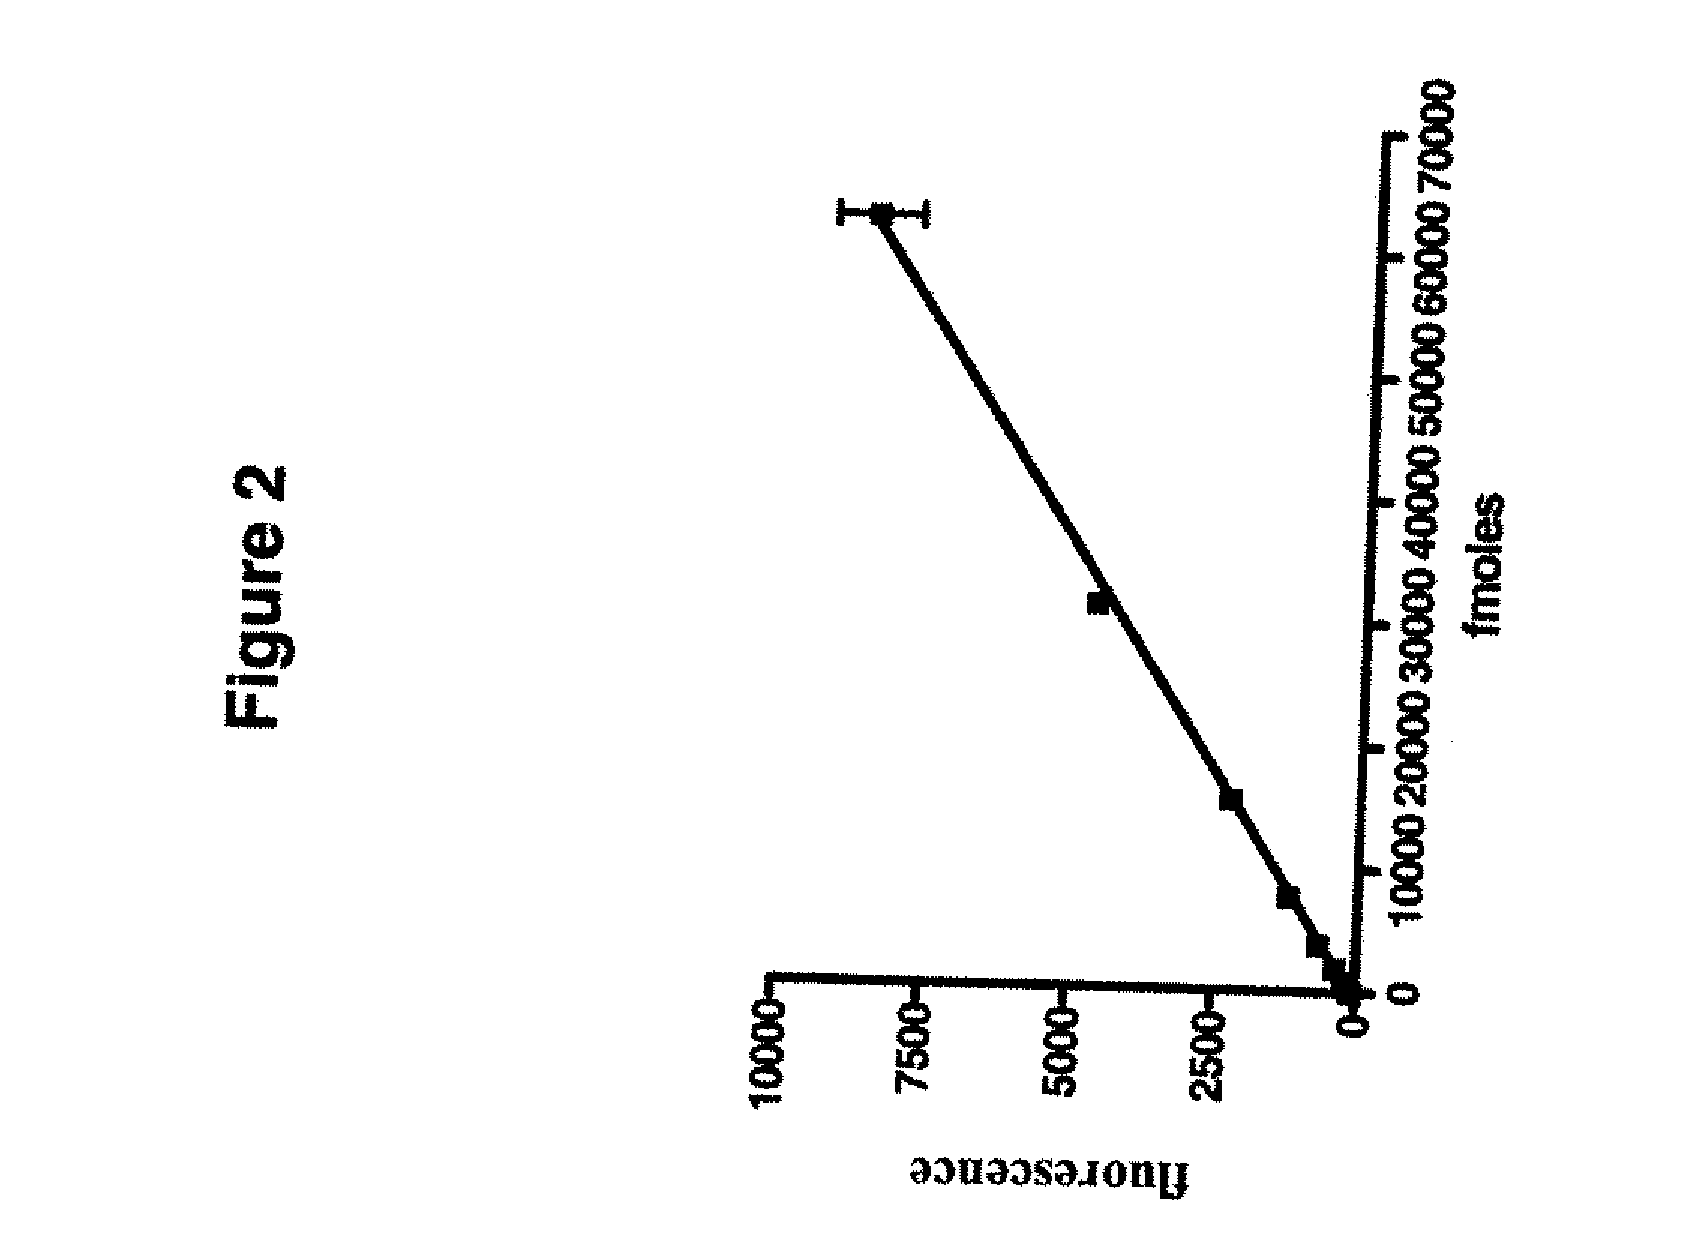 Development of a novel assay for mgmt (methyl guanine methyl transferase)